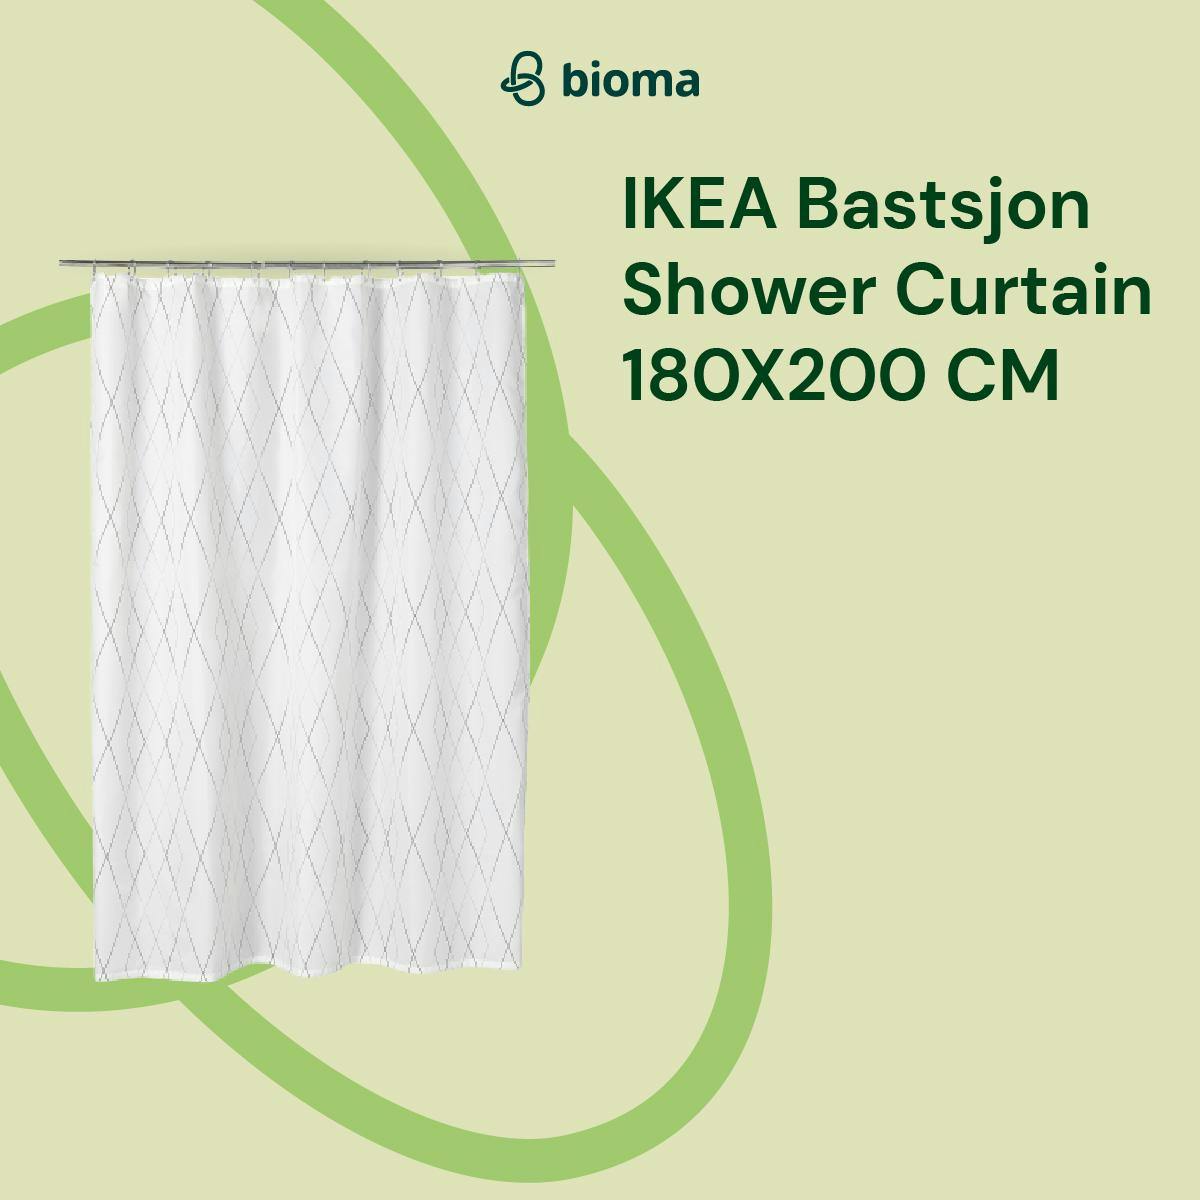 Bastsjon Shower Curtain 180X200CM